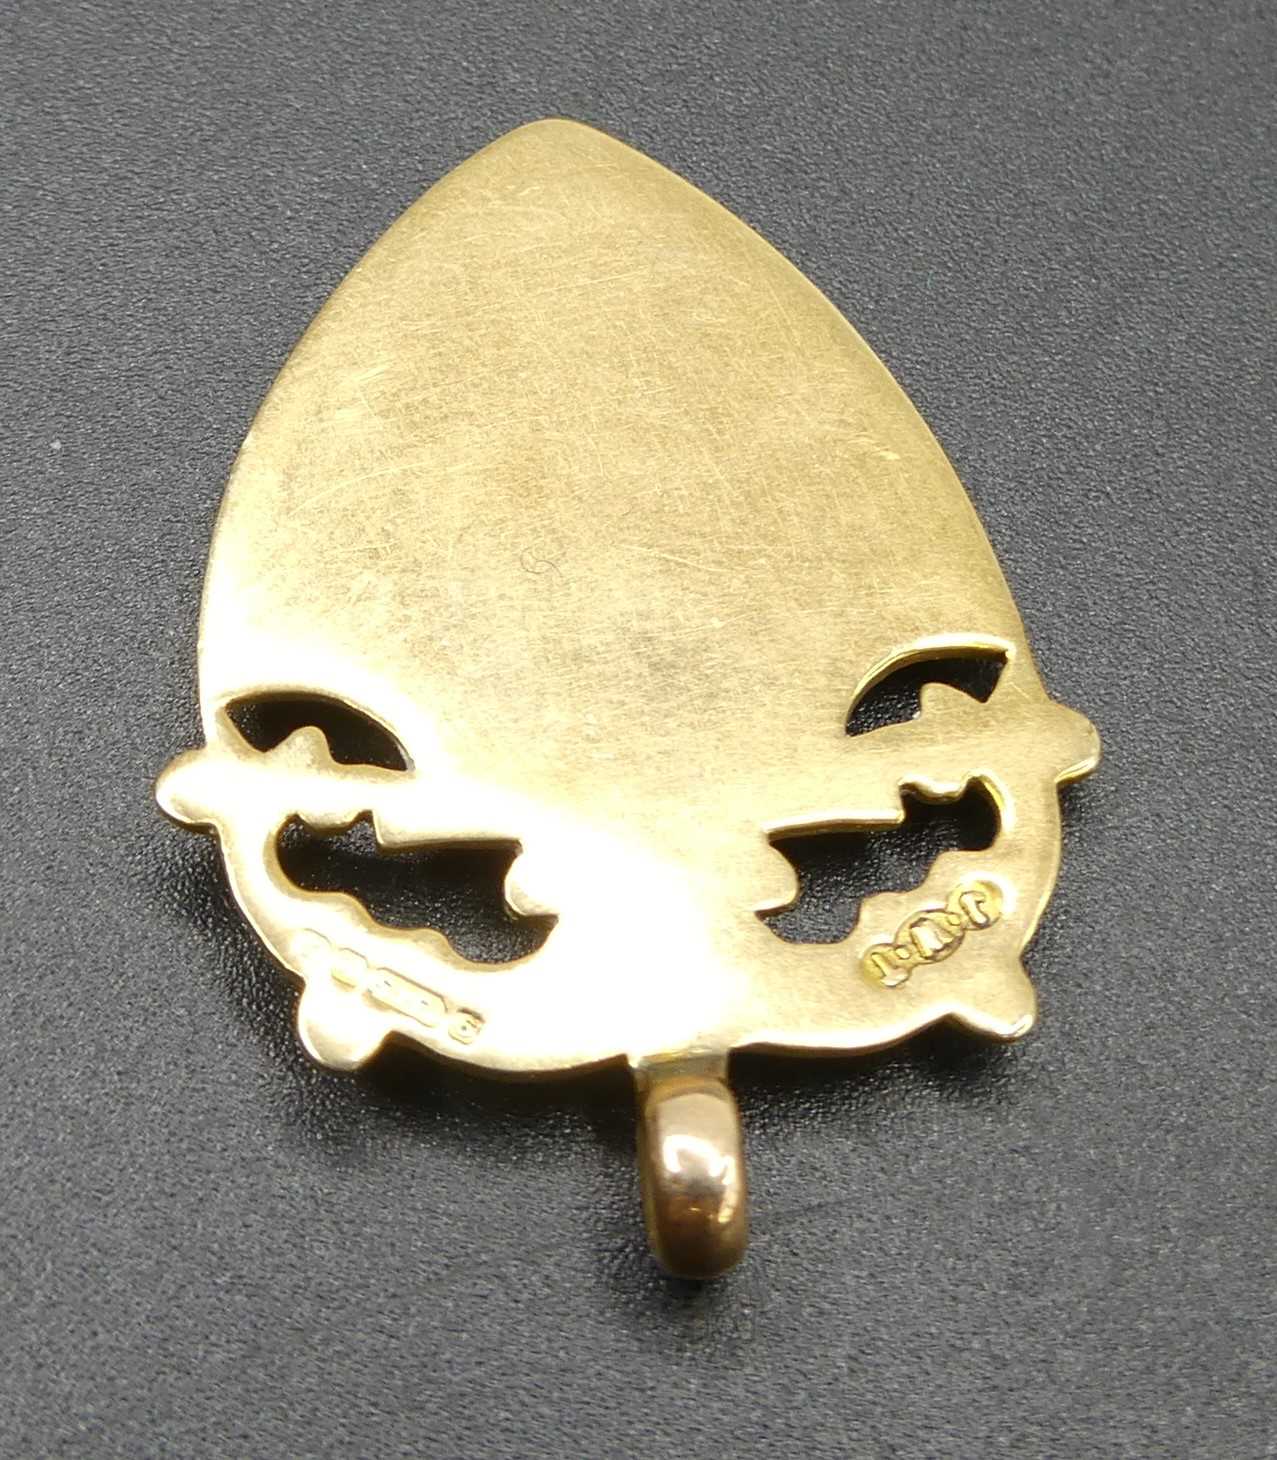 A 9ct gold shield shaped medallion pendant, sponsor JWT, 4.7g, 31mm - Image 2 of 2